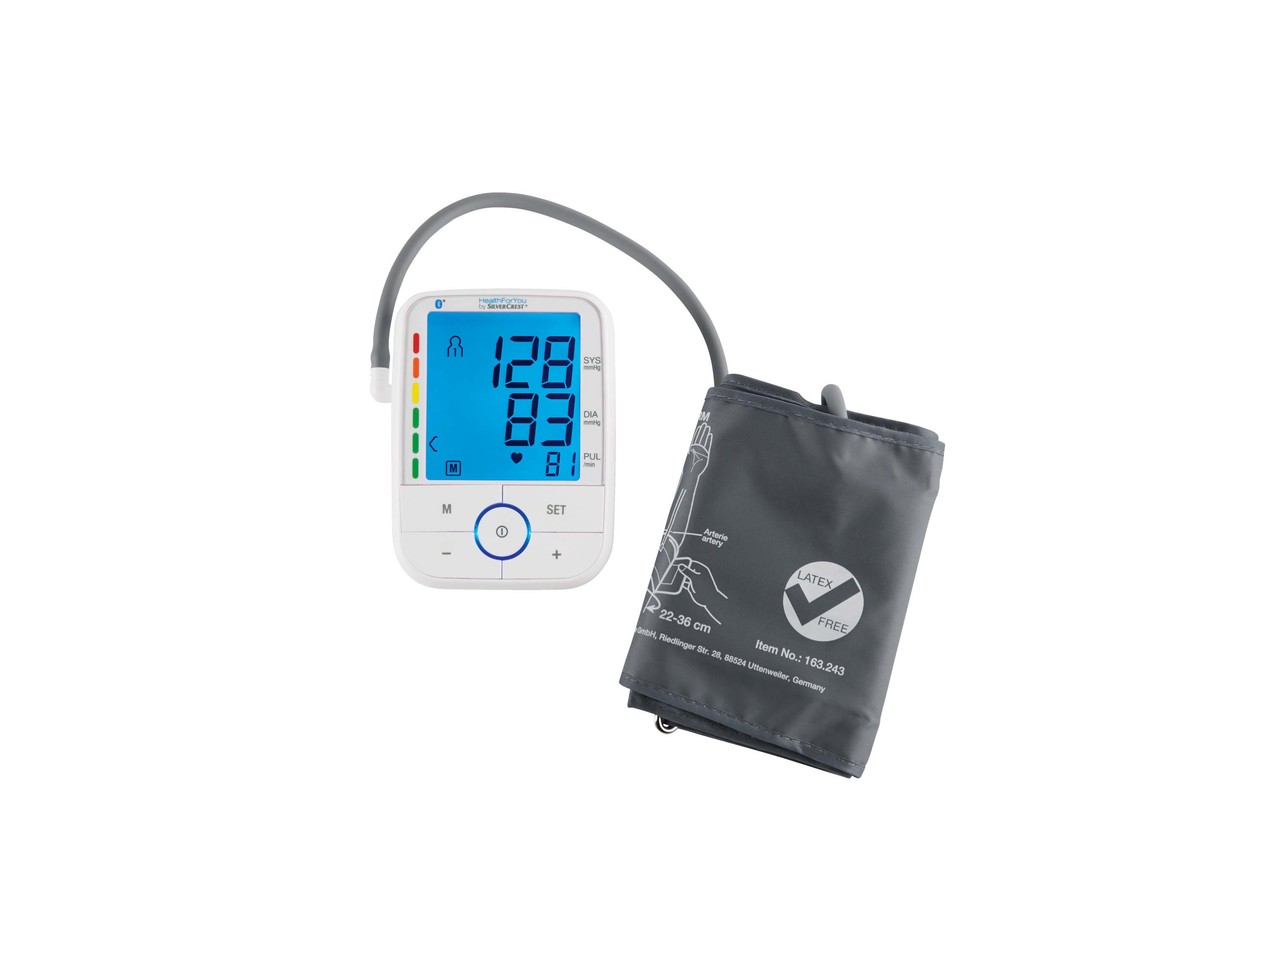 SILVERCREST PERSONAL CARE(R) Bluetooth(R) Upper Arm Blood Pressure Monitor